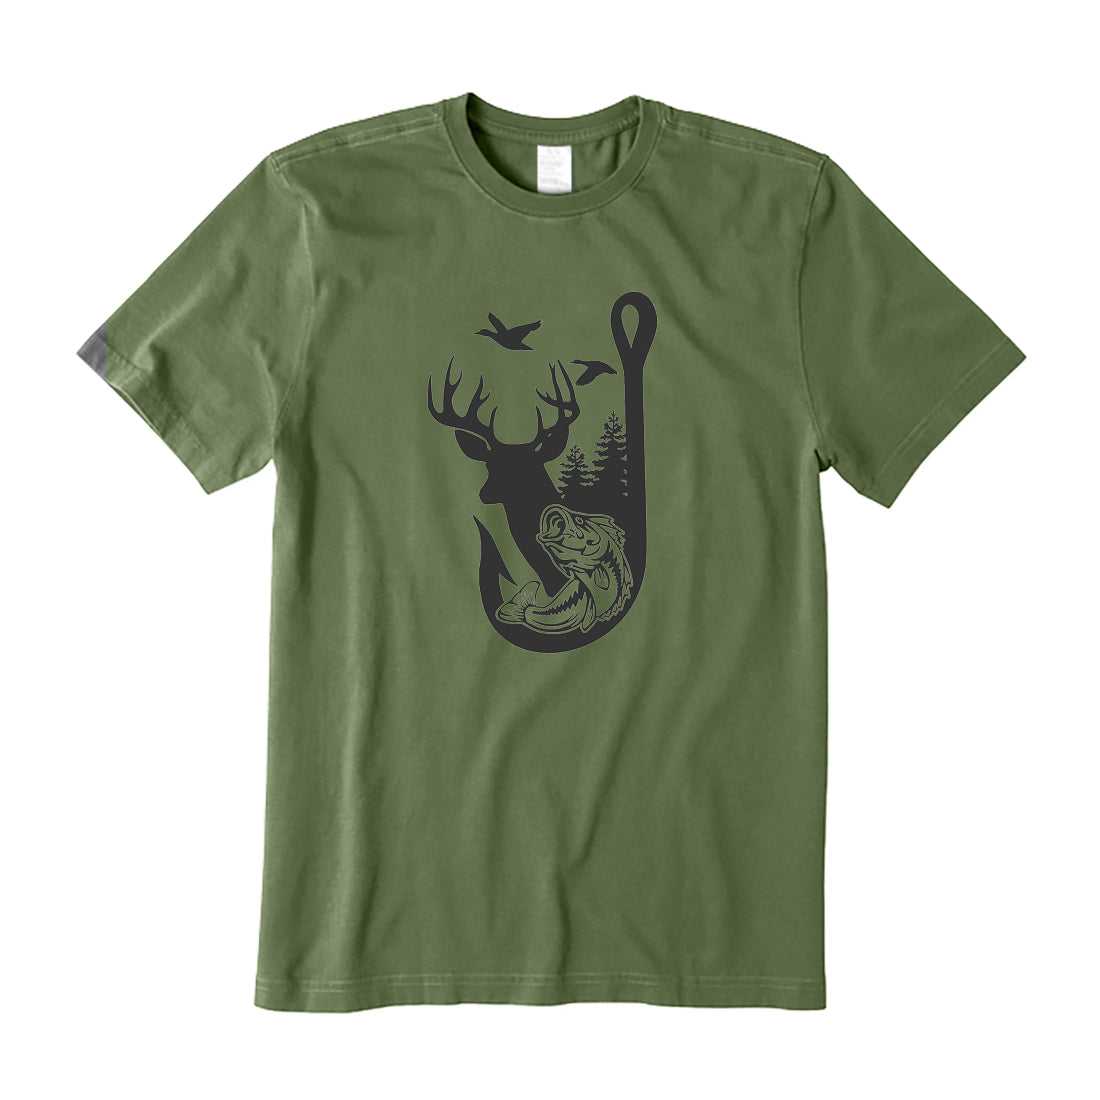 Fishing and Hunting T-Shirt